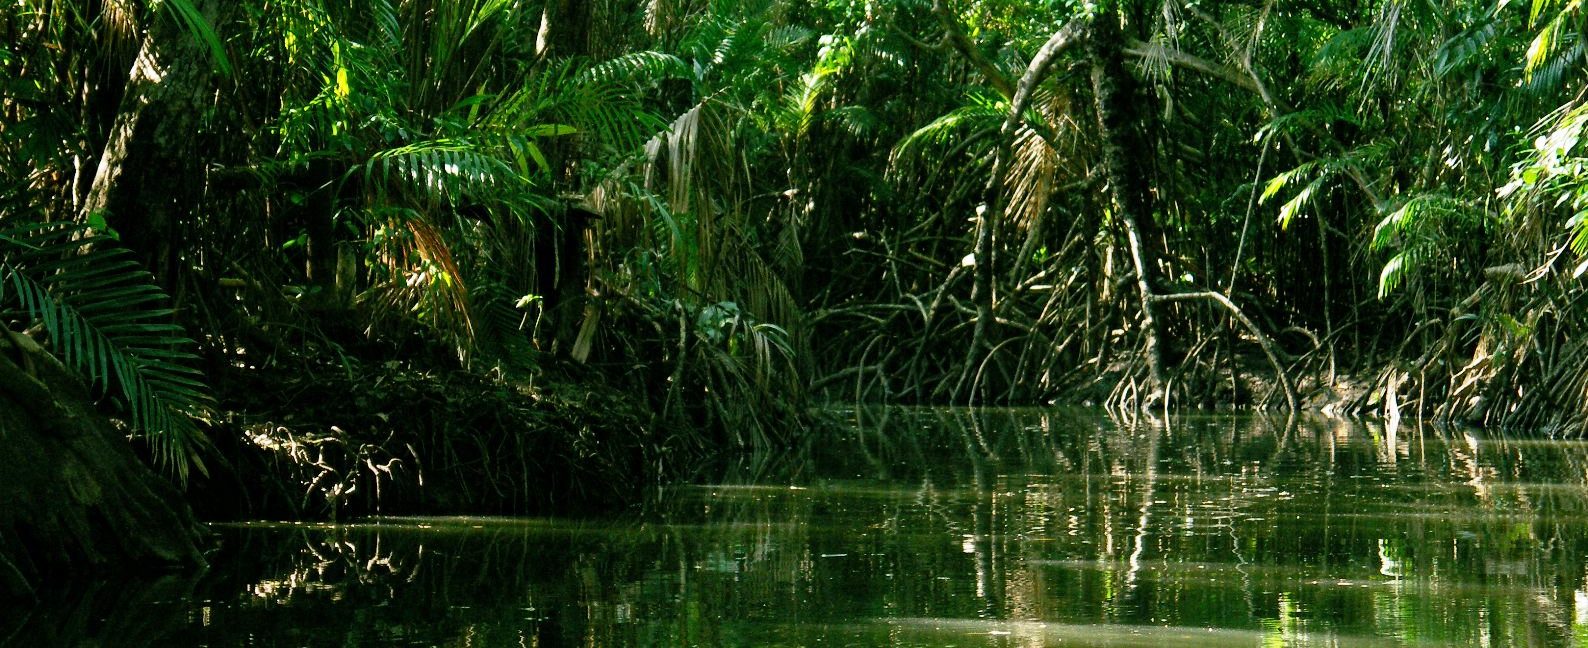 The green Amazon rainforest. 